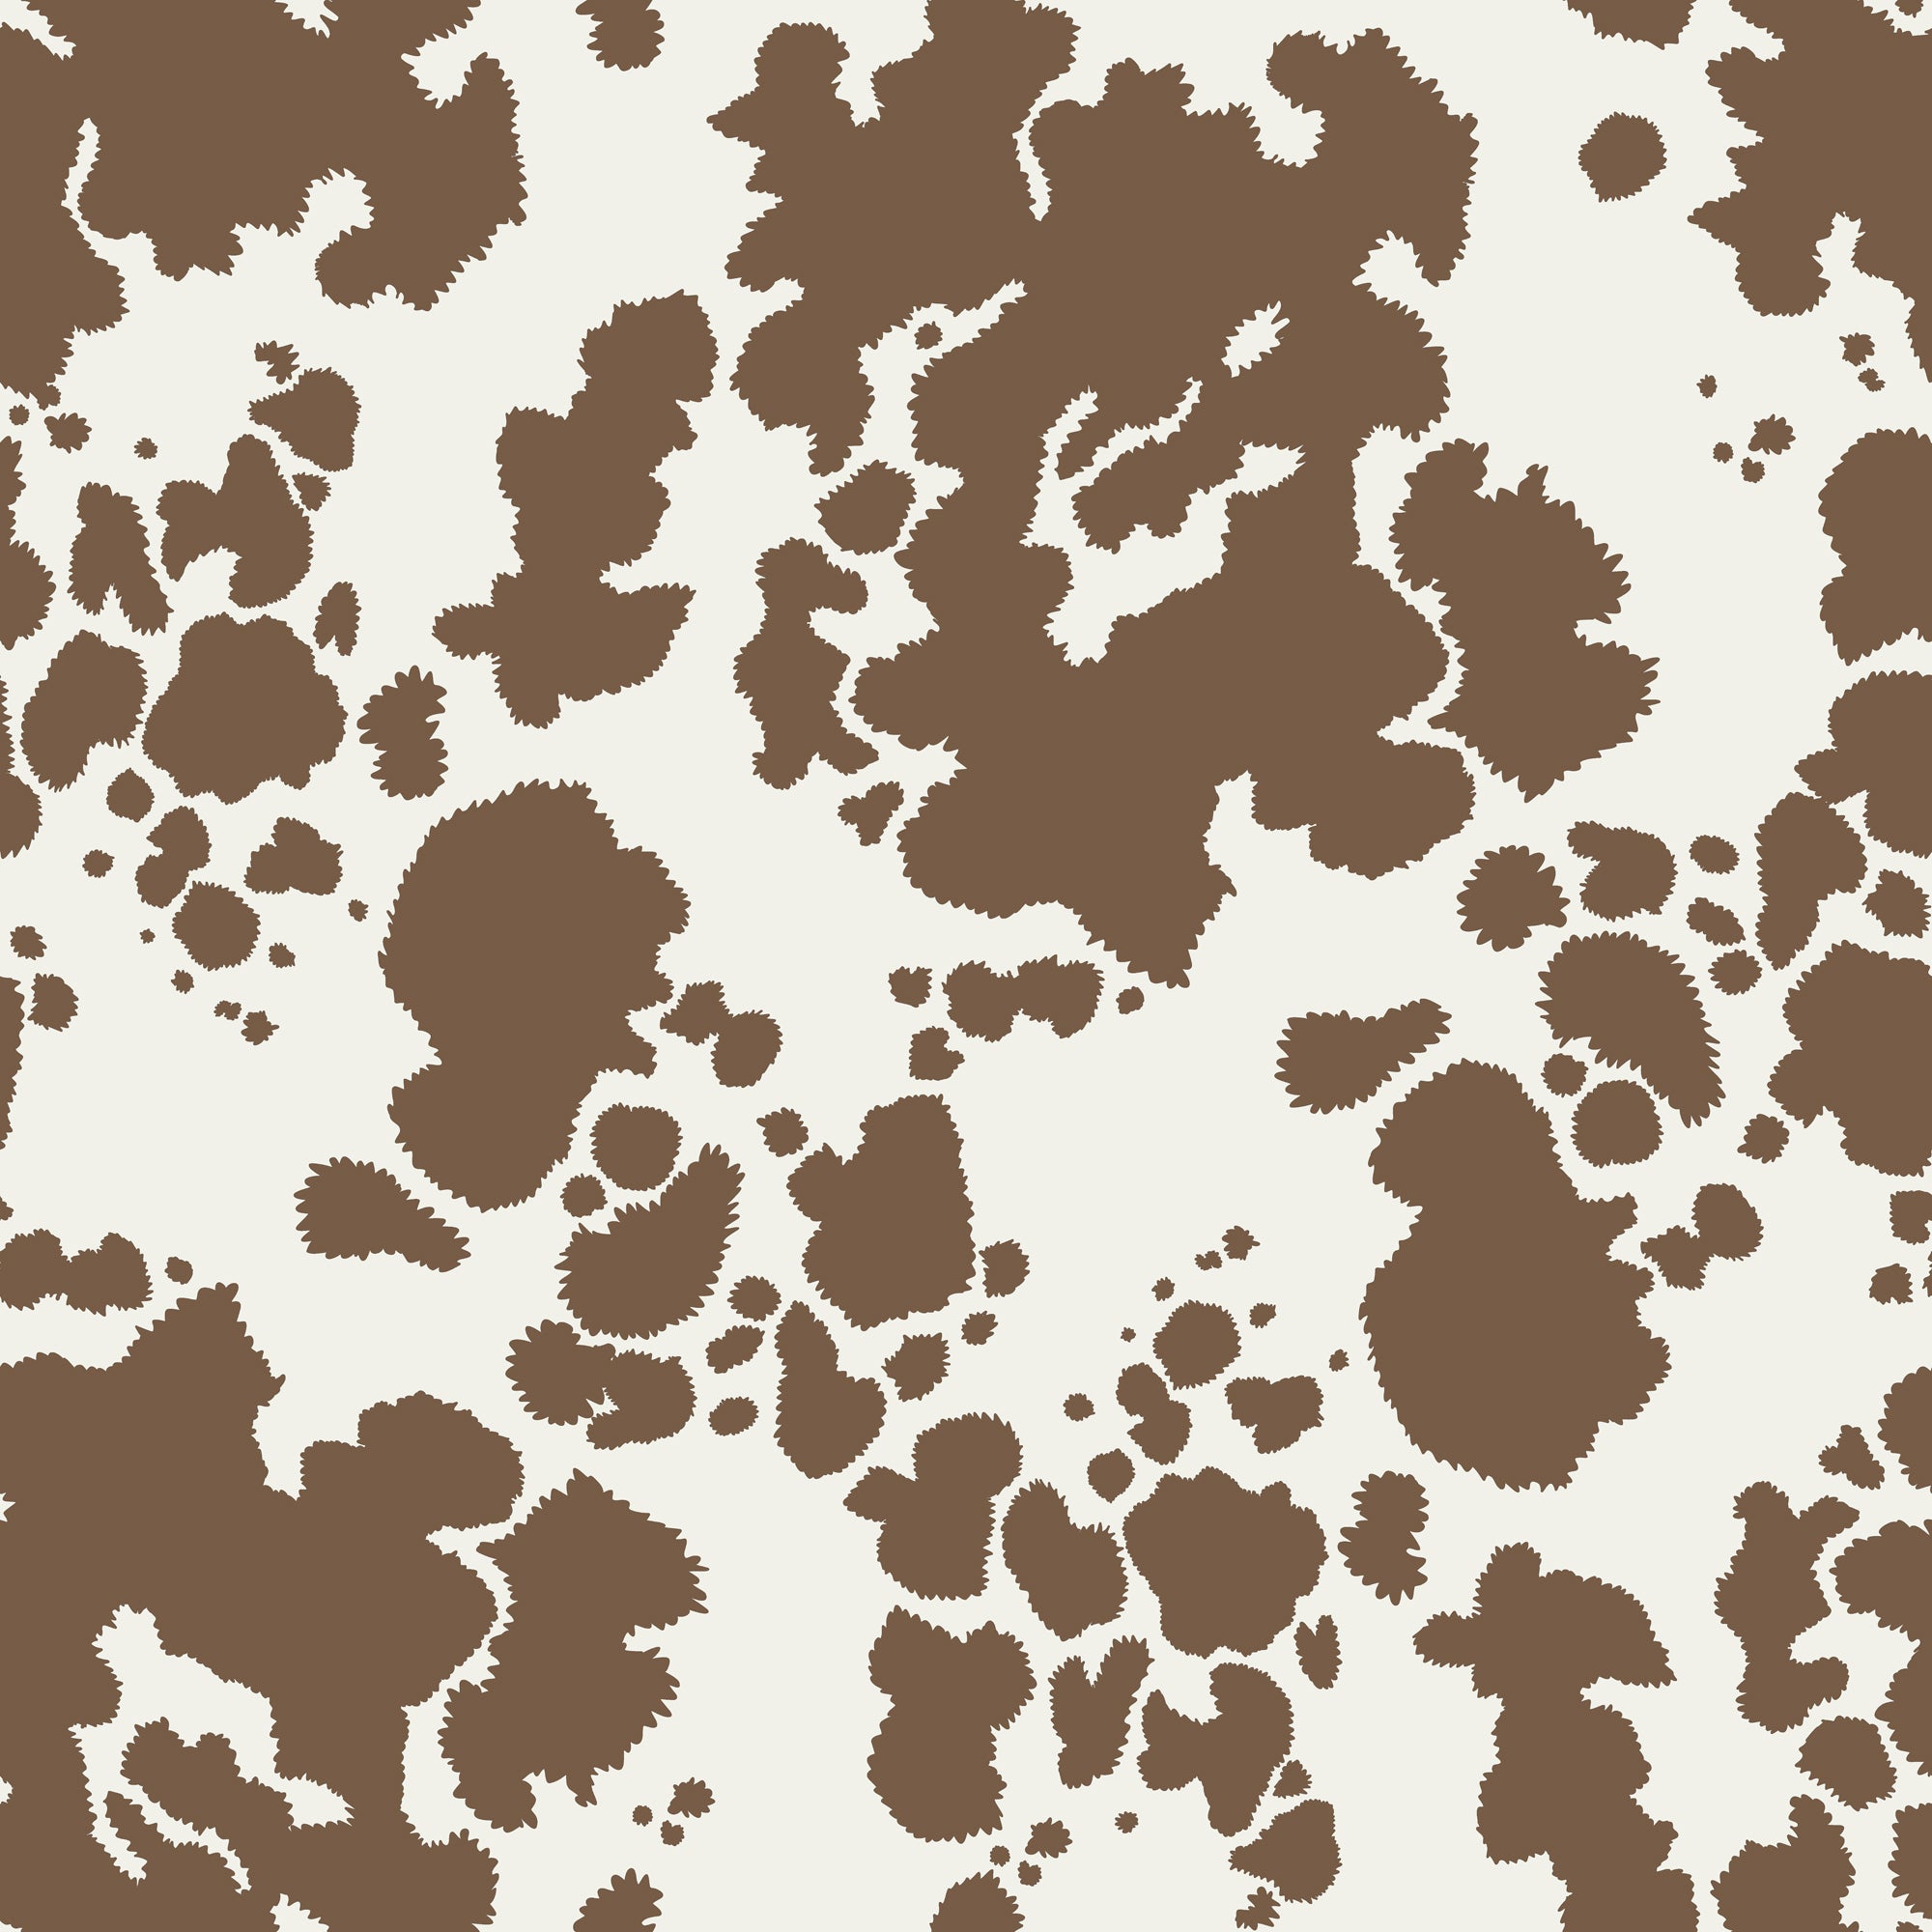 Cow Print Pattern Images - Free Download on Freepik